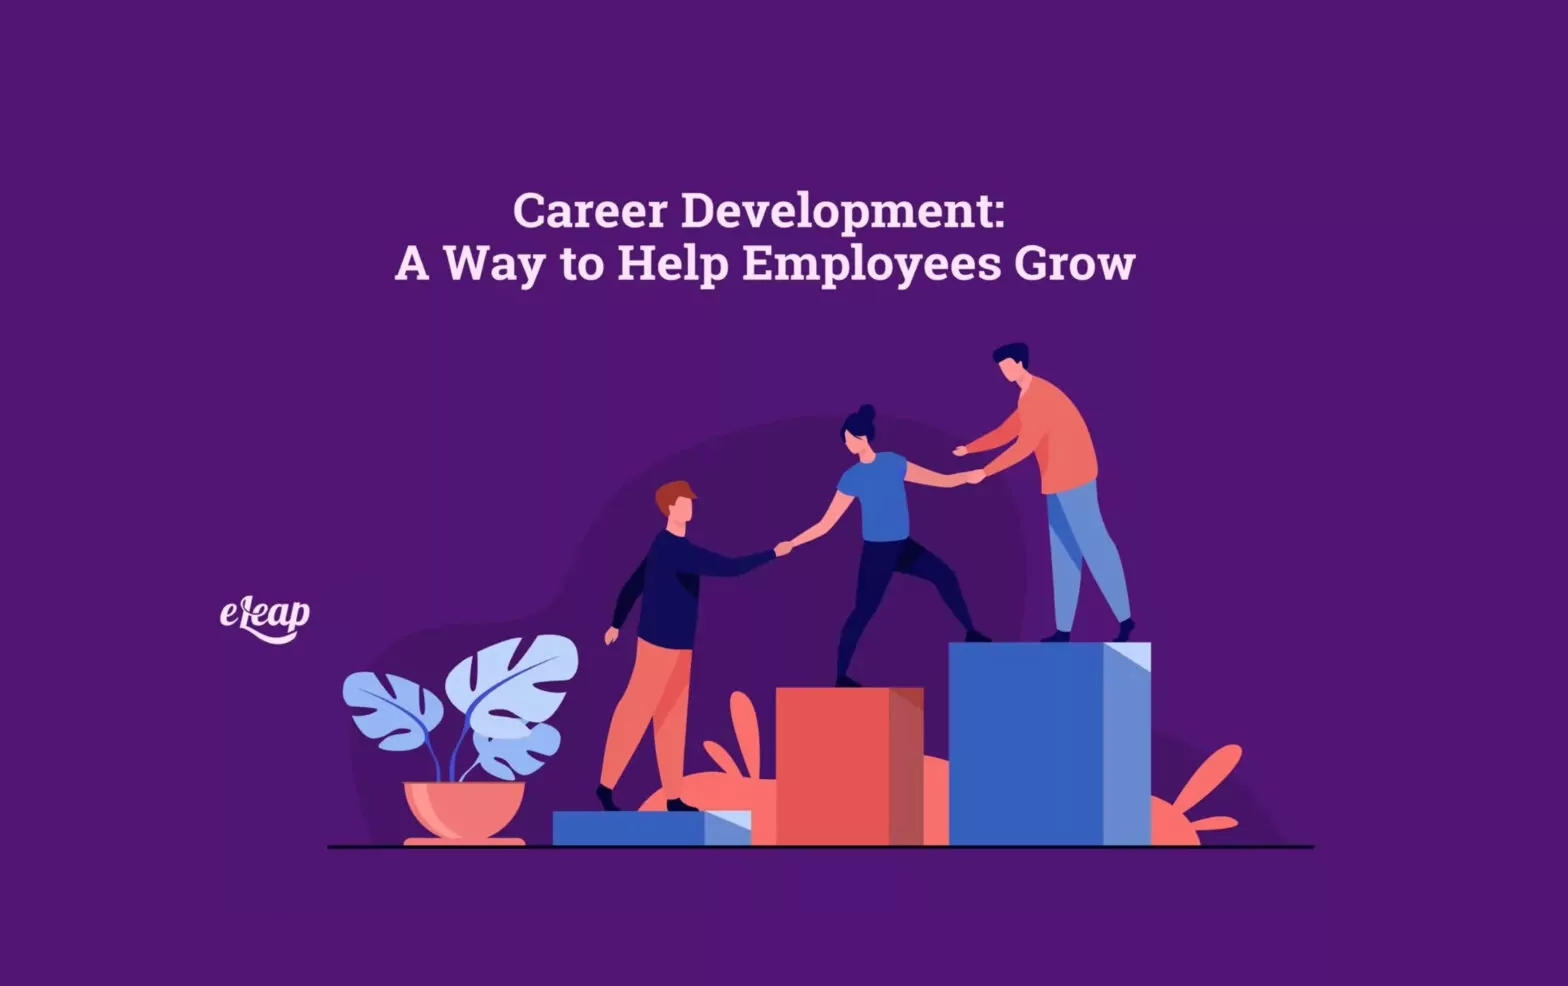 Career Development: A Way to Help Employees Grow